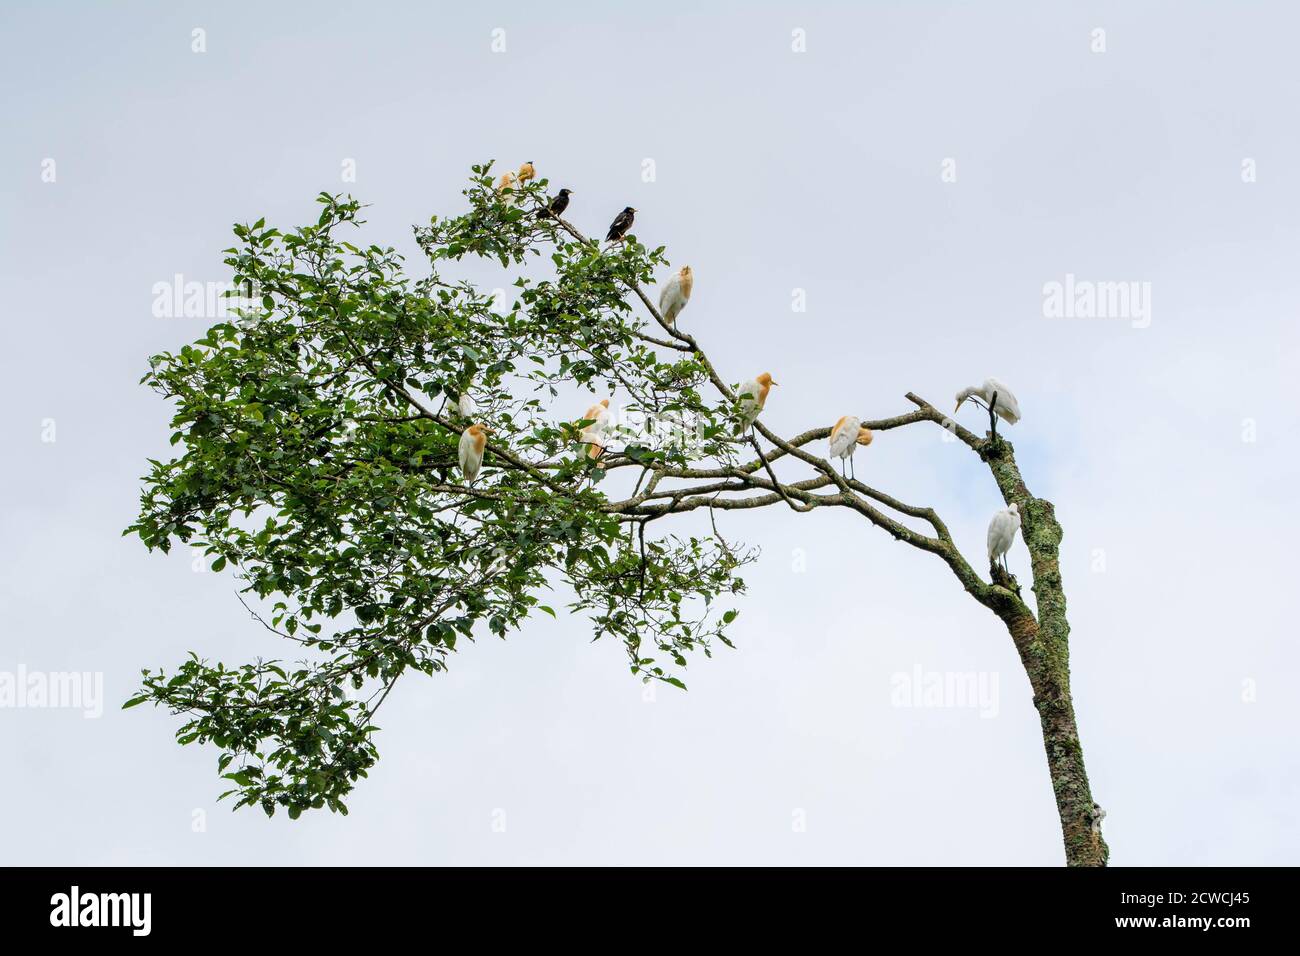 A group of bird on single tree Stock Photo